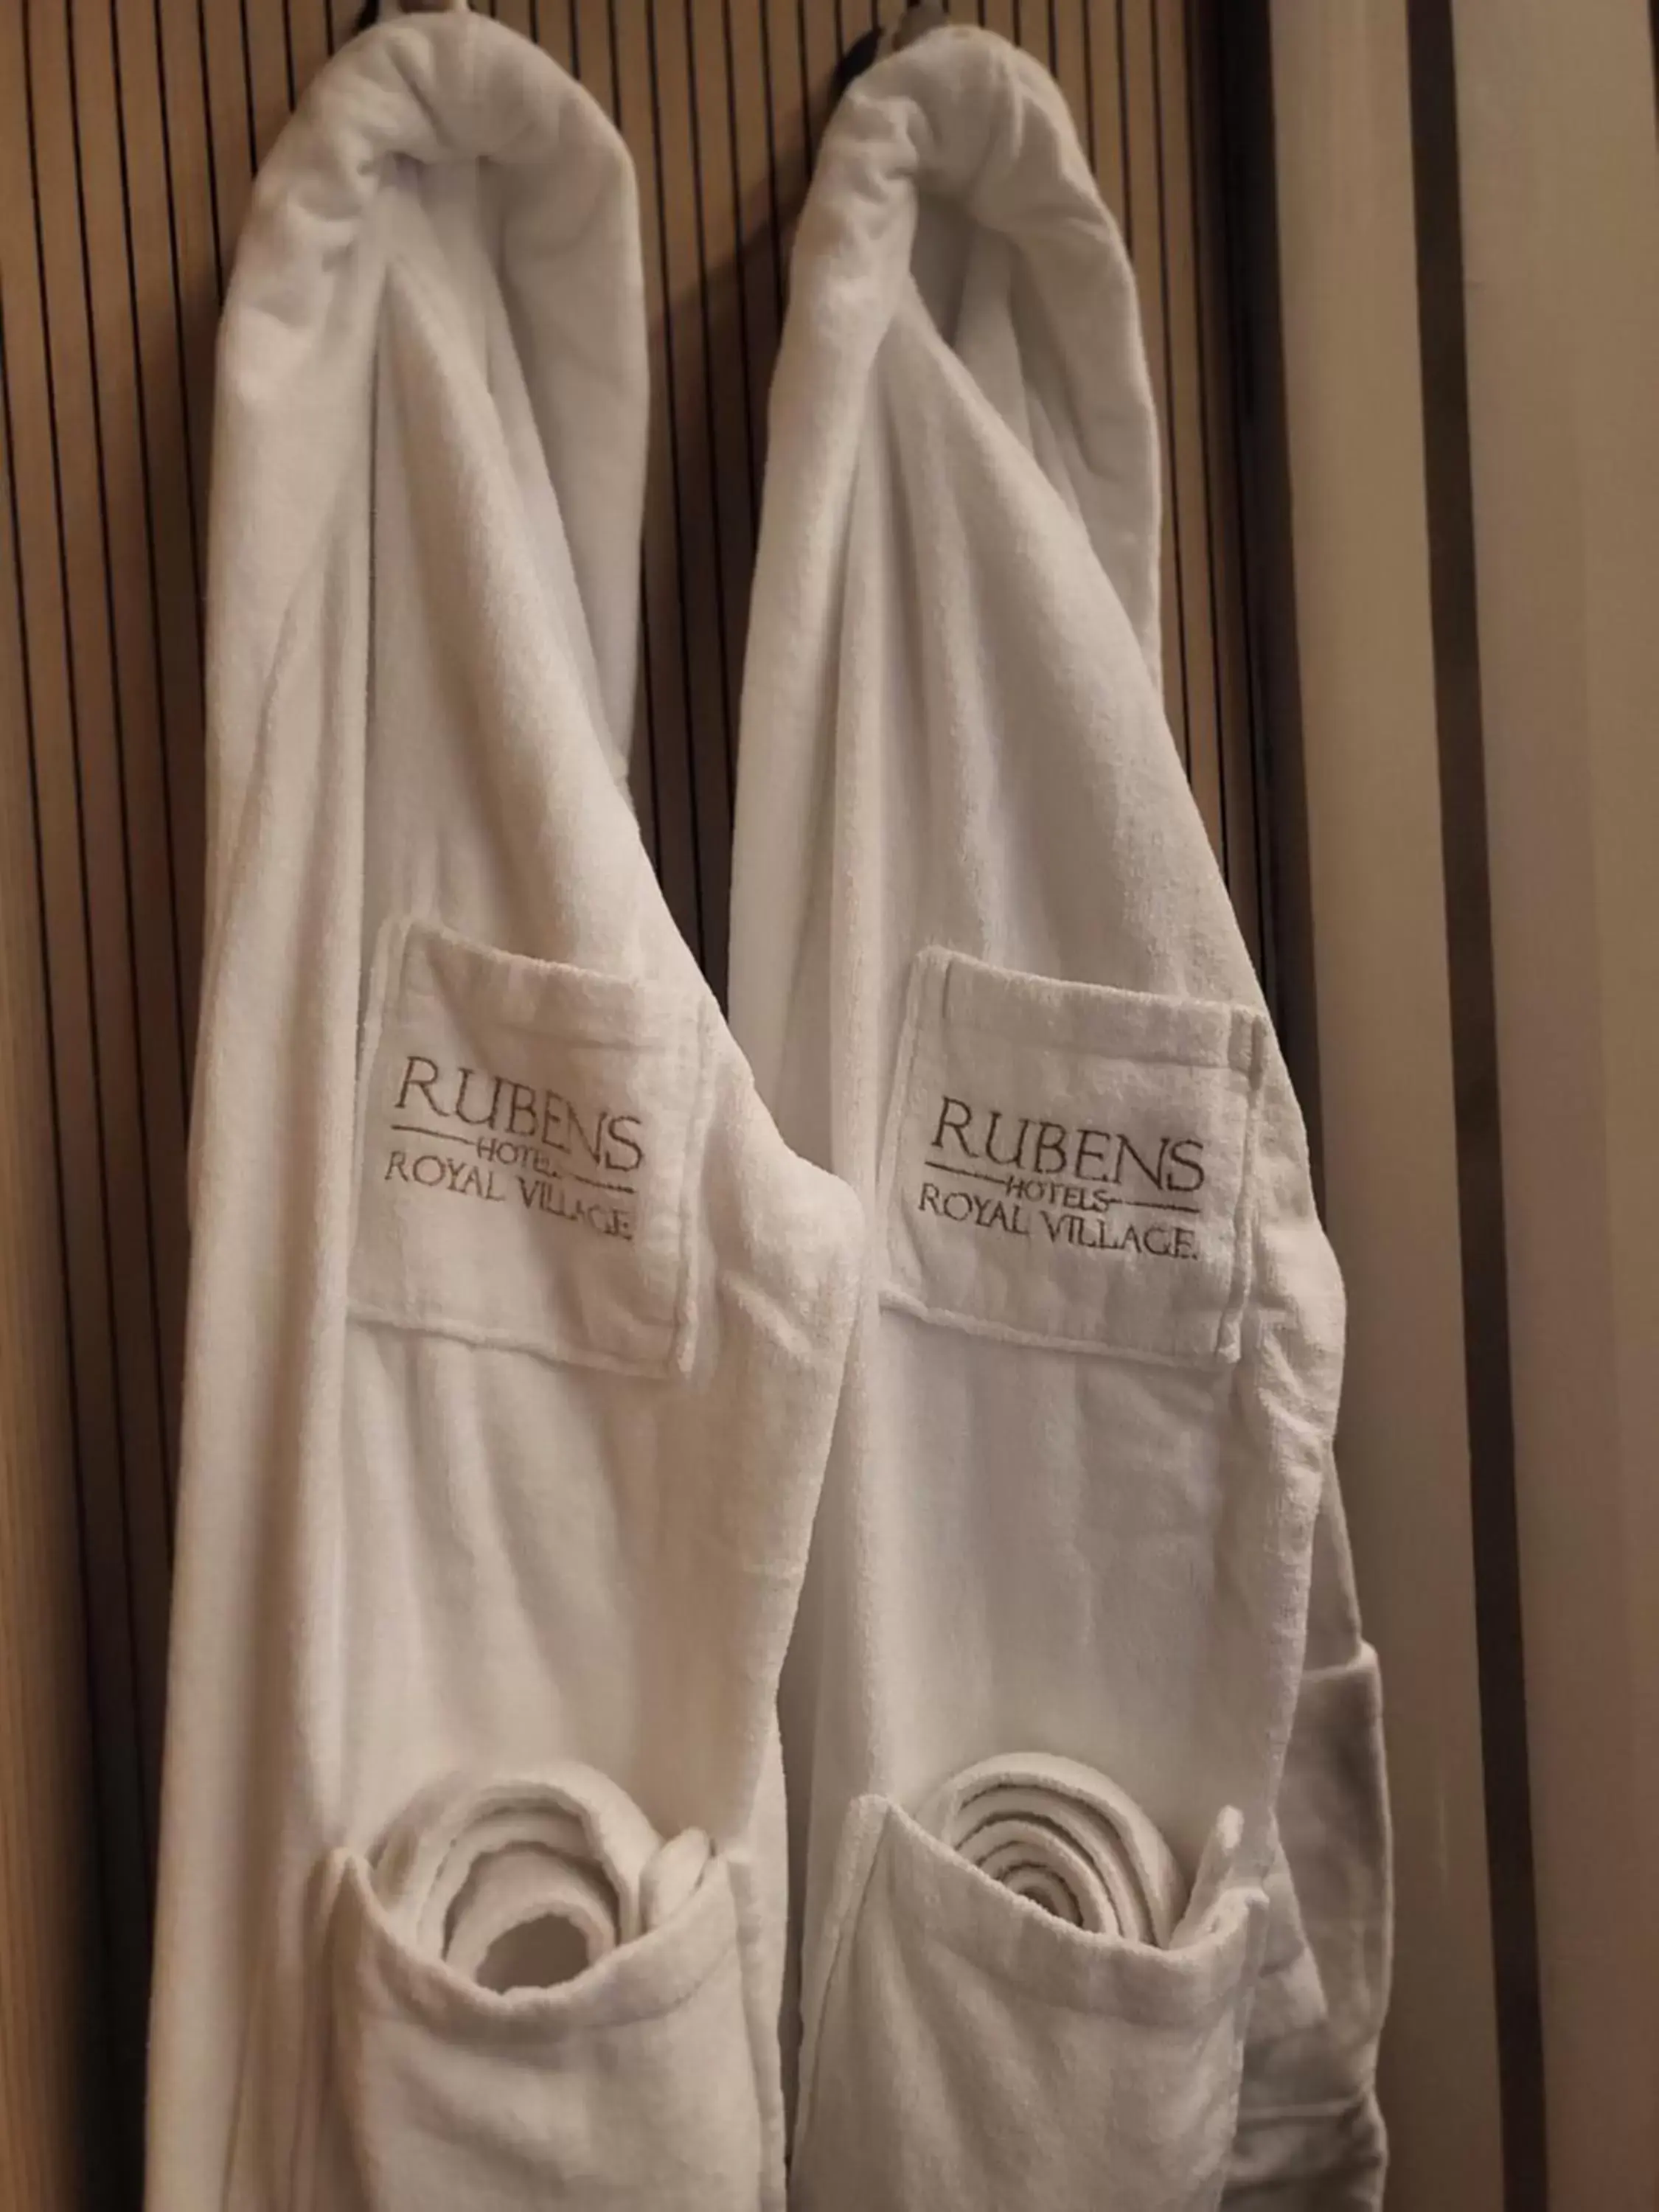 towels in Rubens Hotels Royal Village Porto Gaia